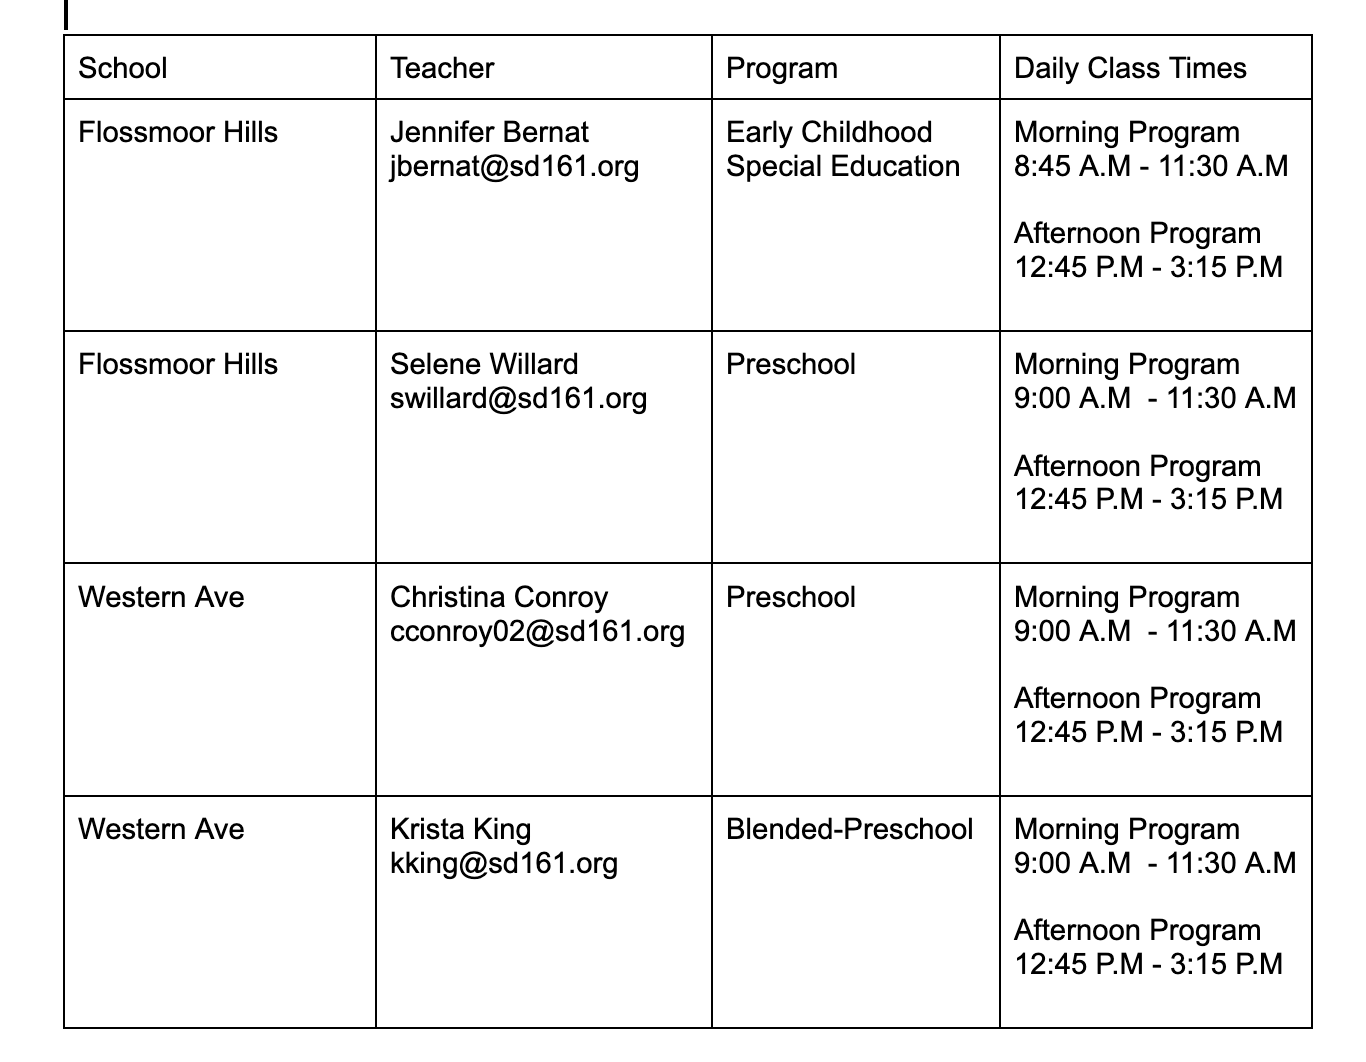 Preschool Program Teachers and Program Times